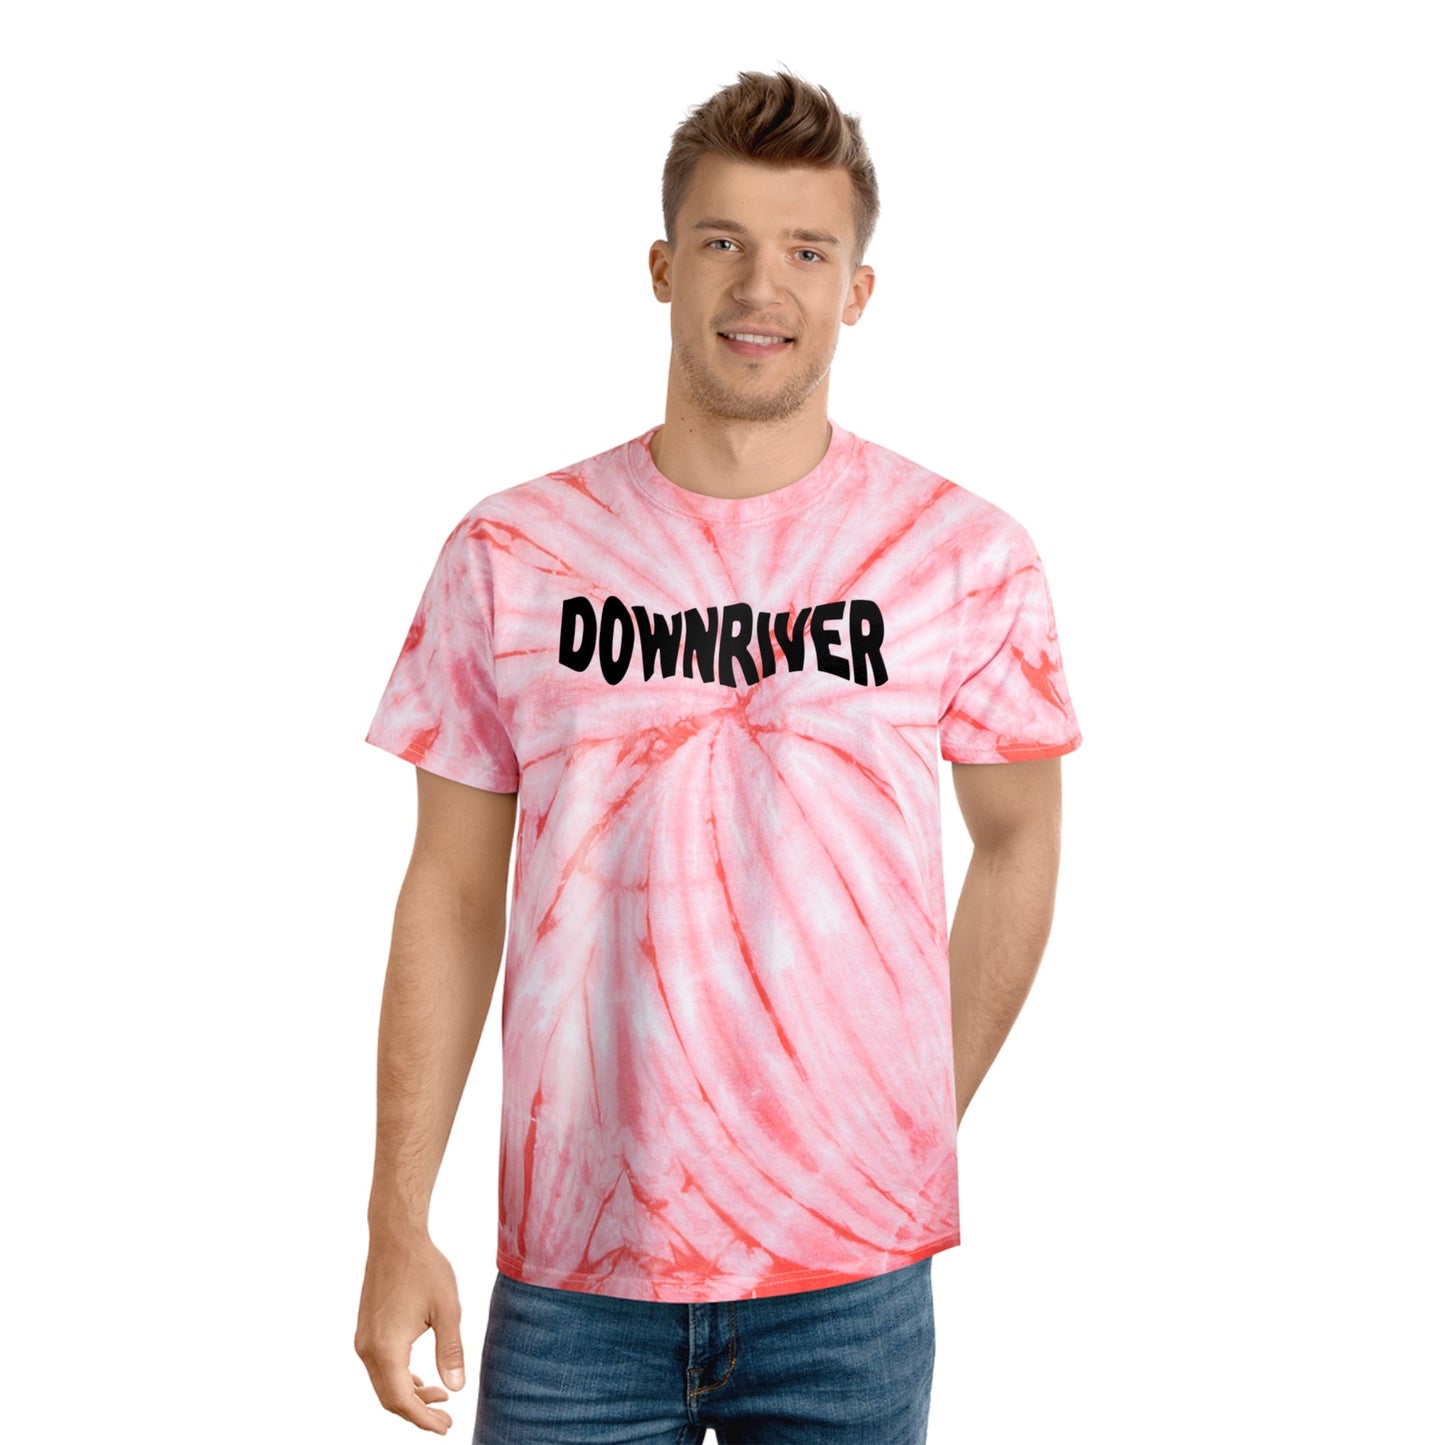 Downriver 92 Nevermind Heavyweight Tie Dye T Shirt | Downriver Clothing Apparel | Detroit Michigan | Downriver World